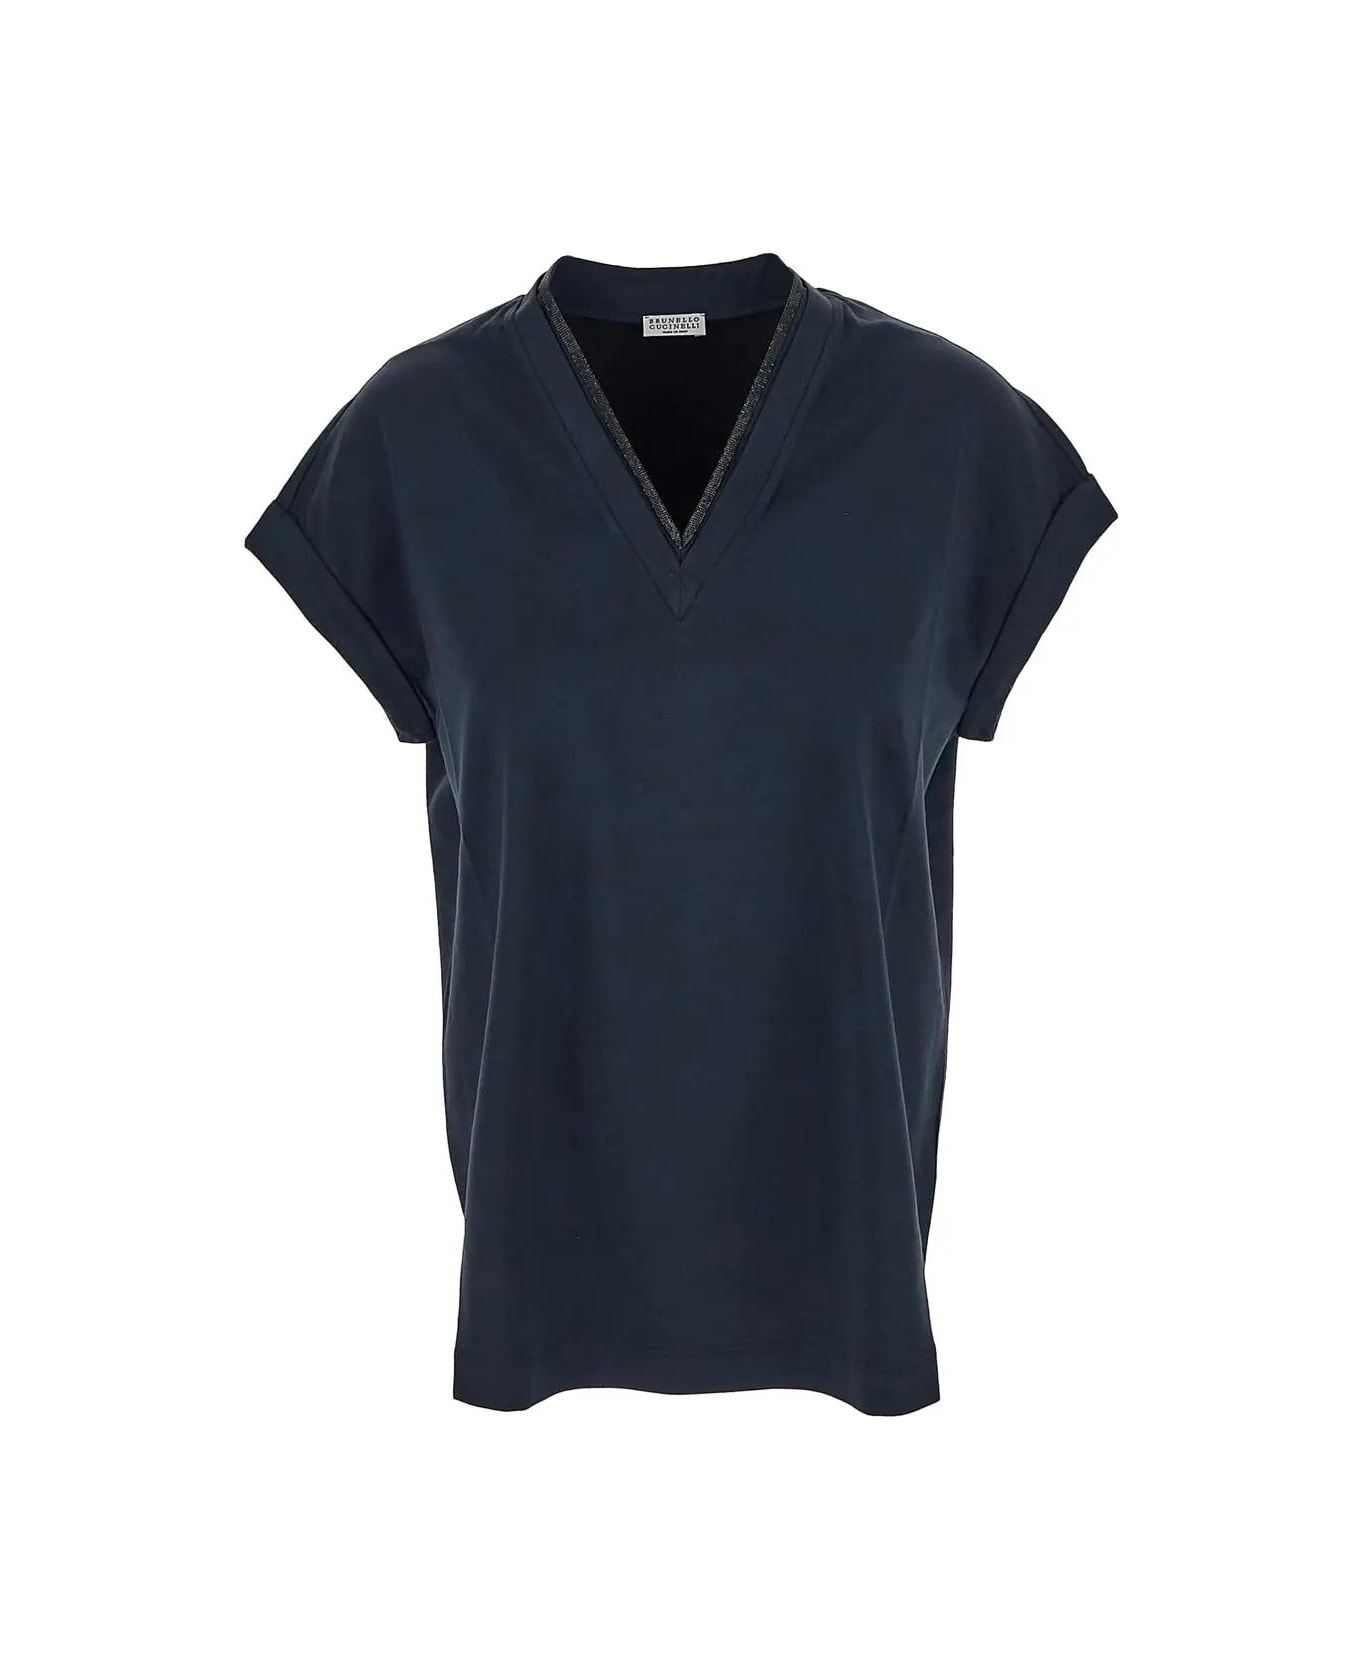 Brunello Cucinelli Cotton T-shirt - Blue